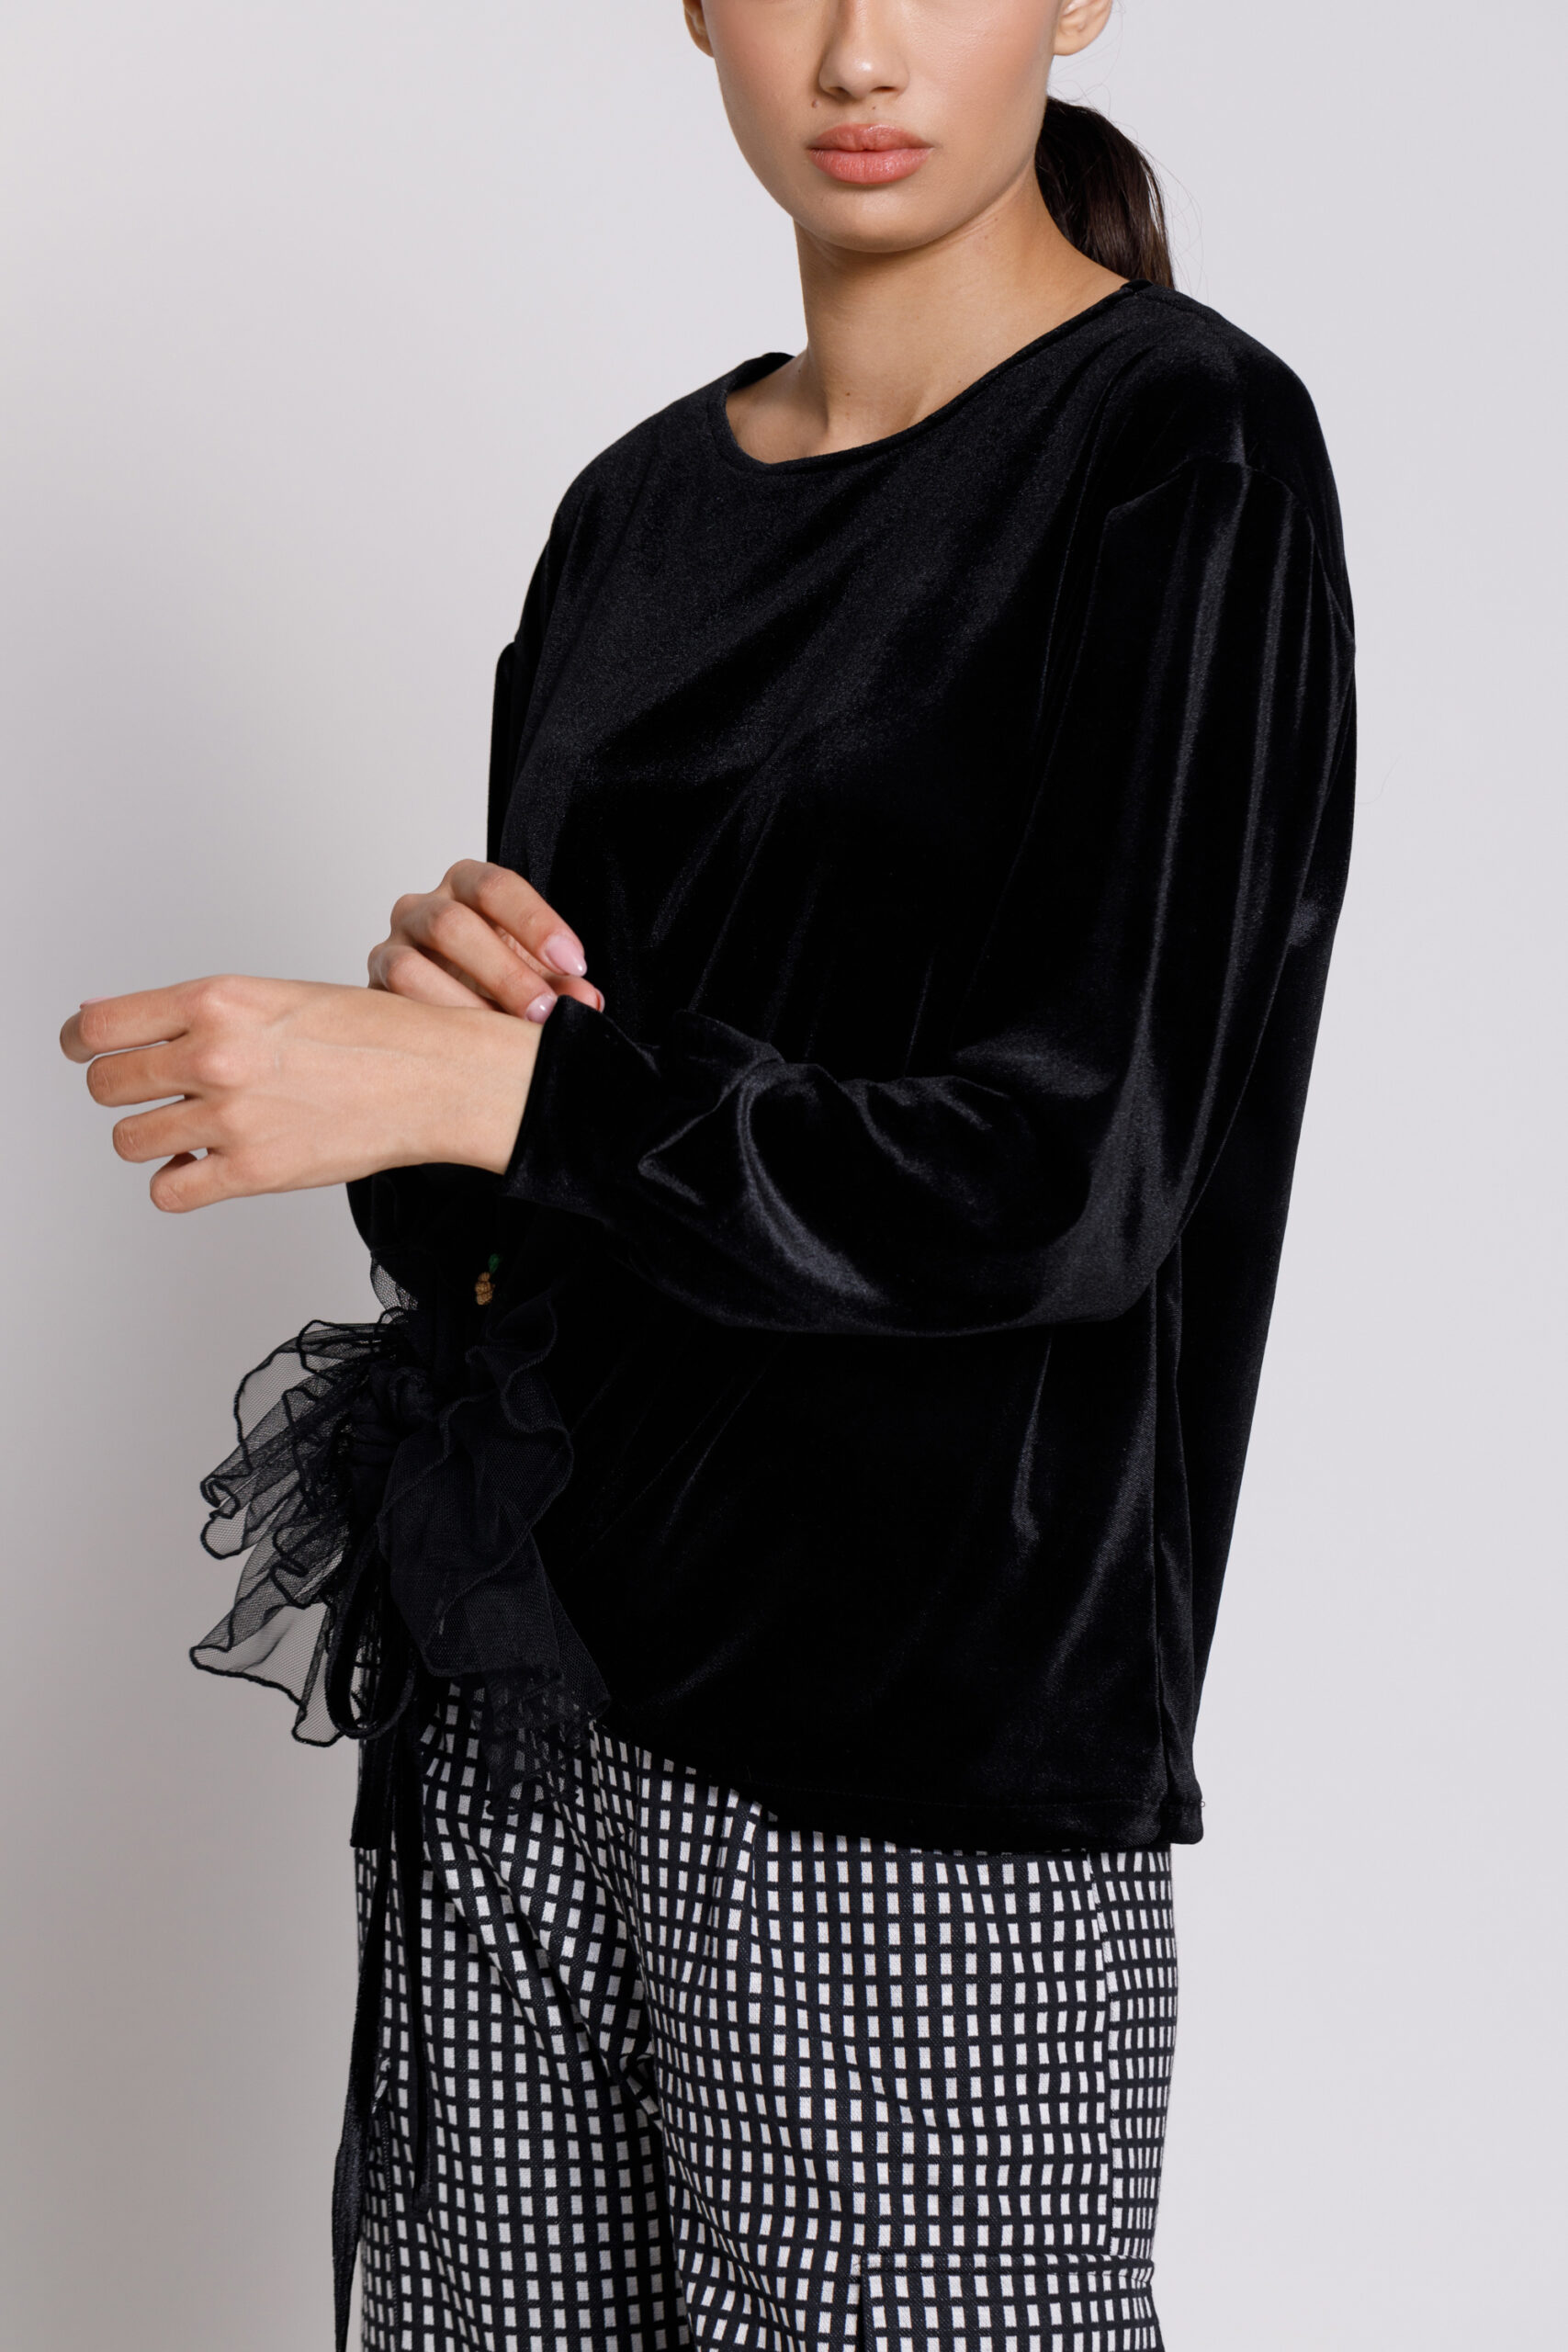 EVE casual black velvet blouse. Natural fabrics, original design, handmade embroidery